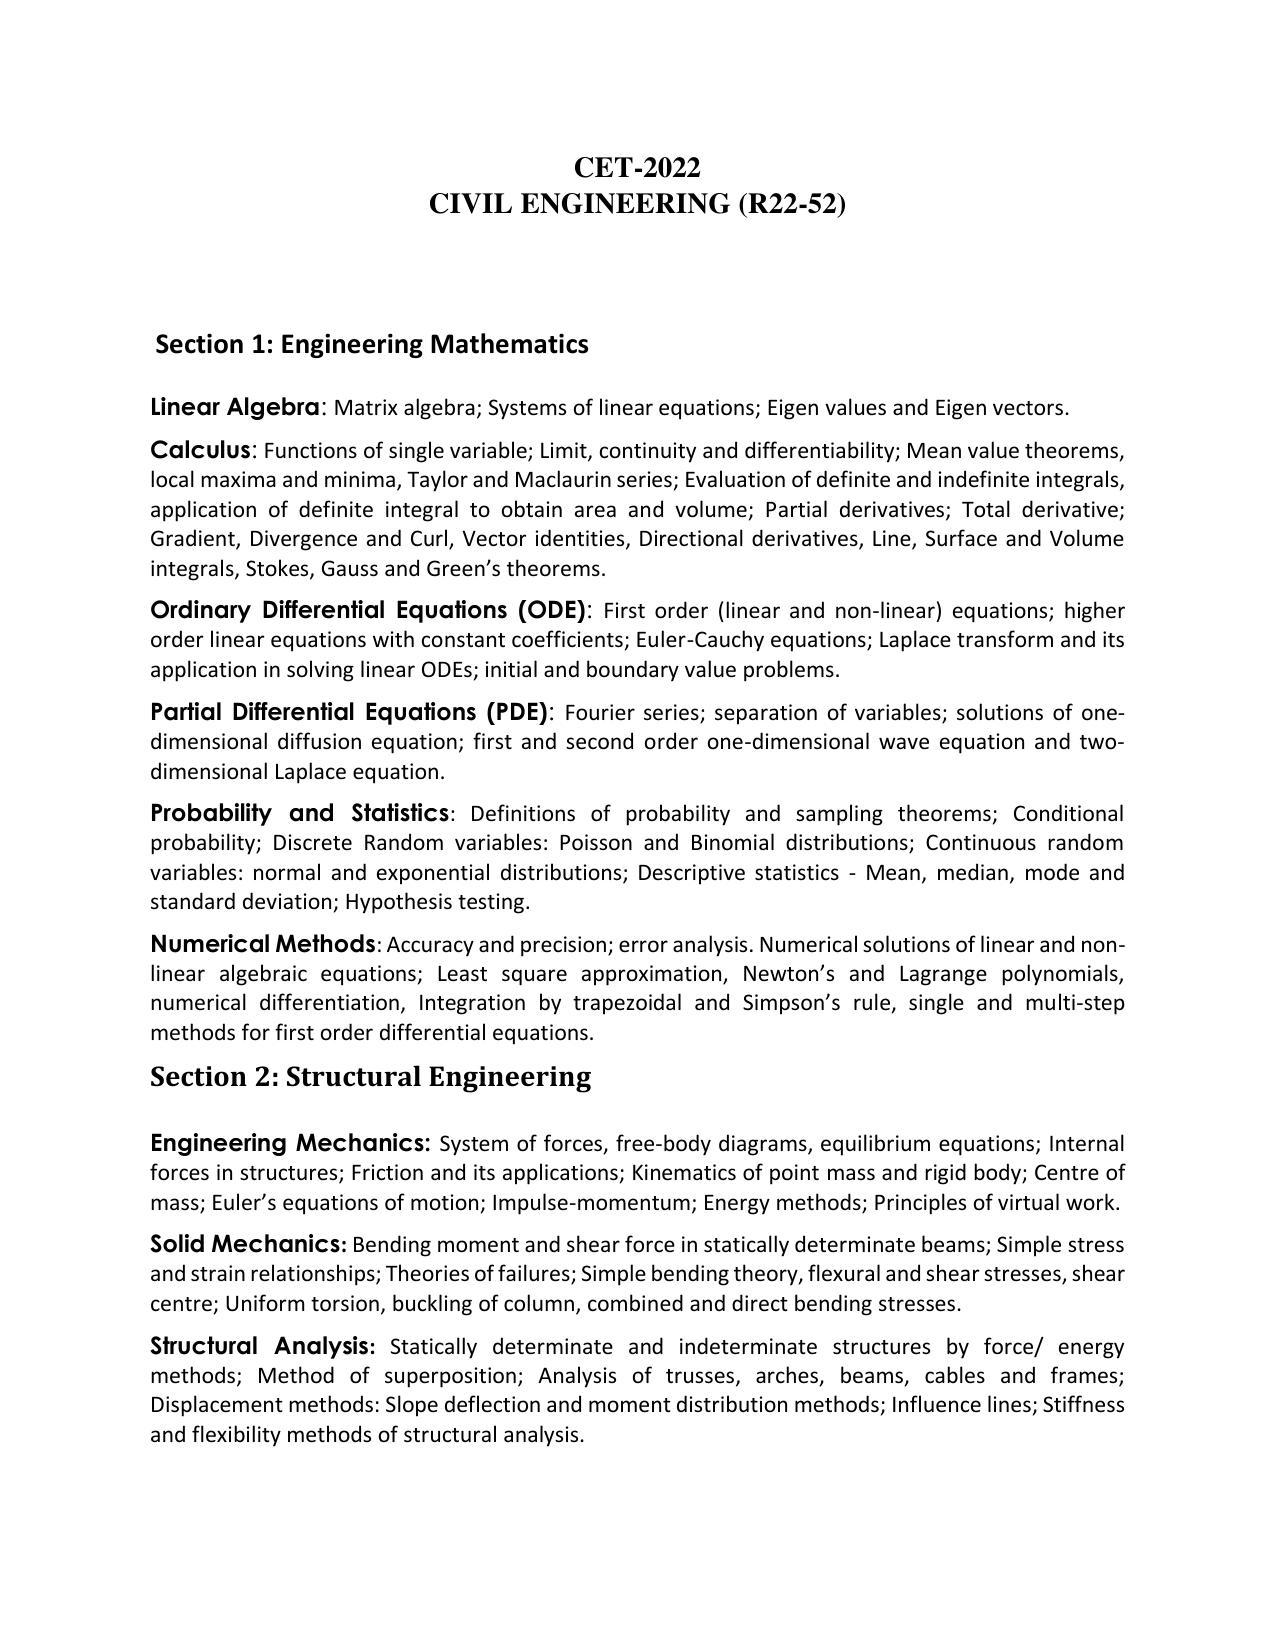 AP RCET Civil Engineering Syllabus - Page 1